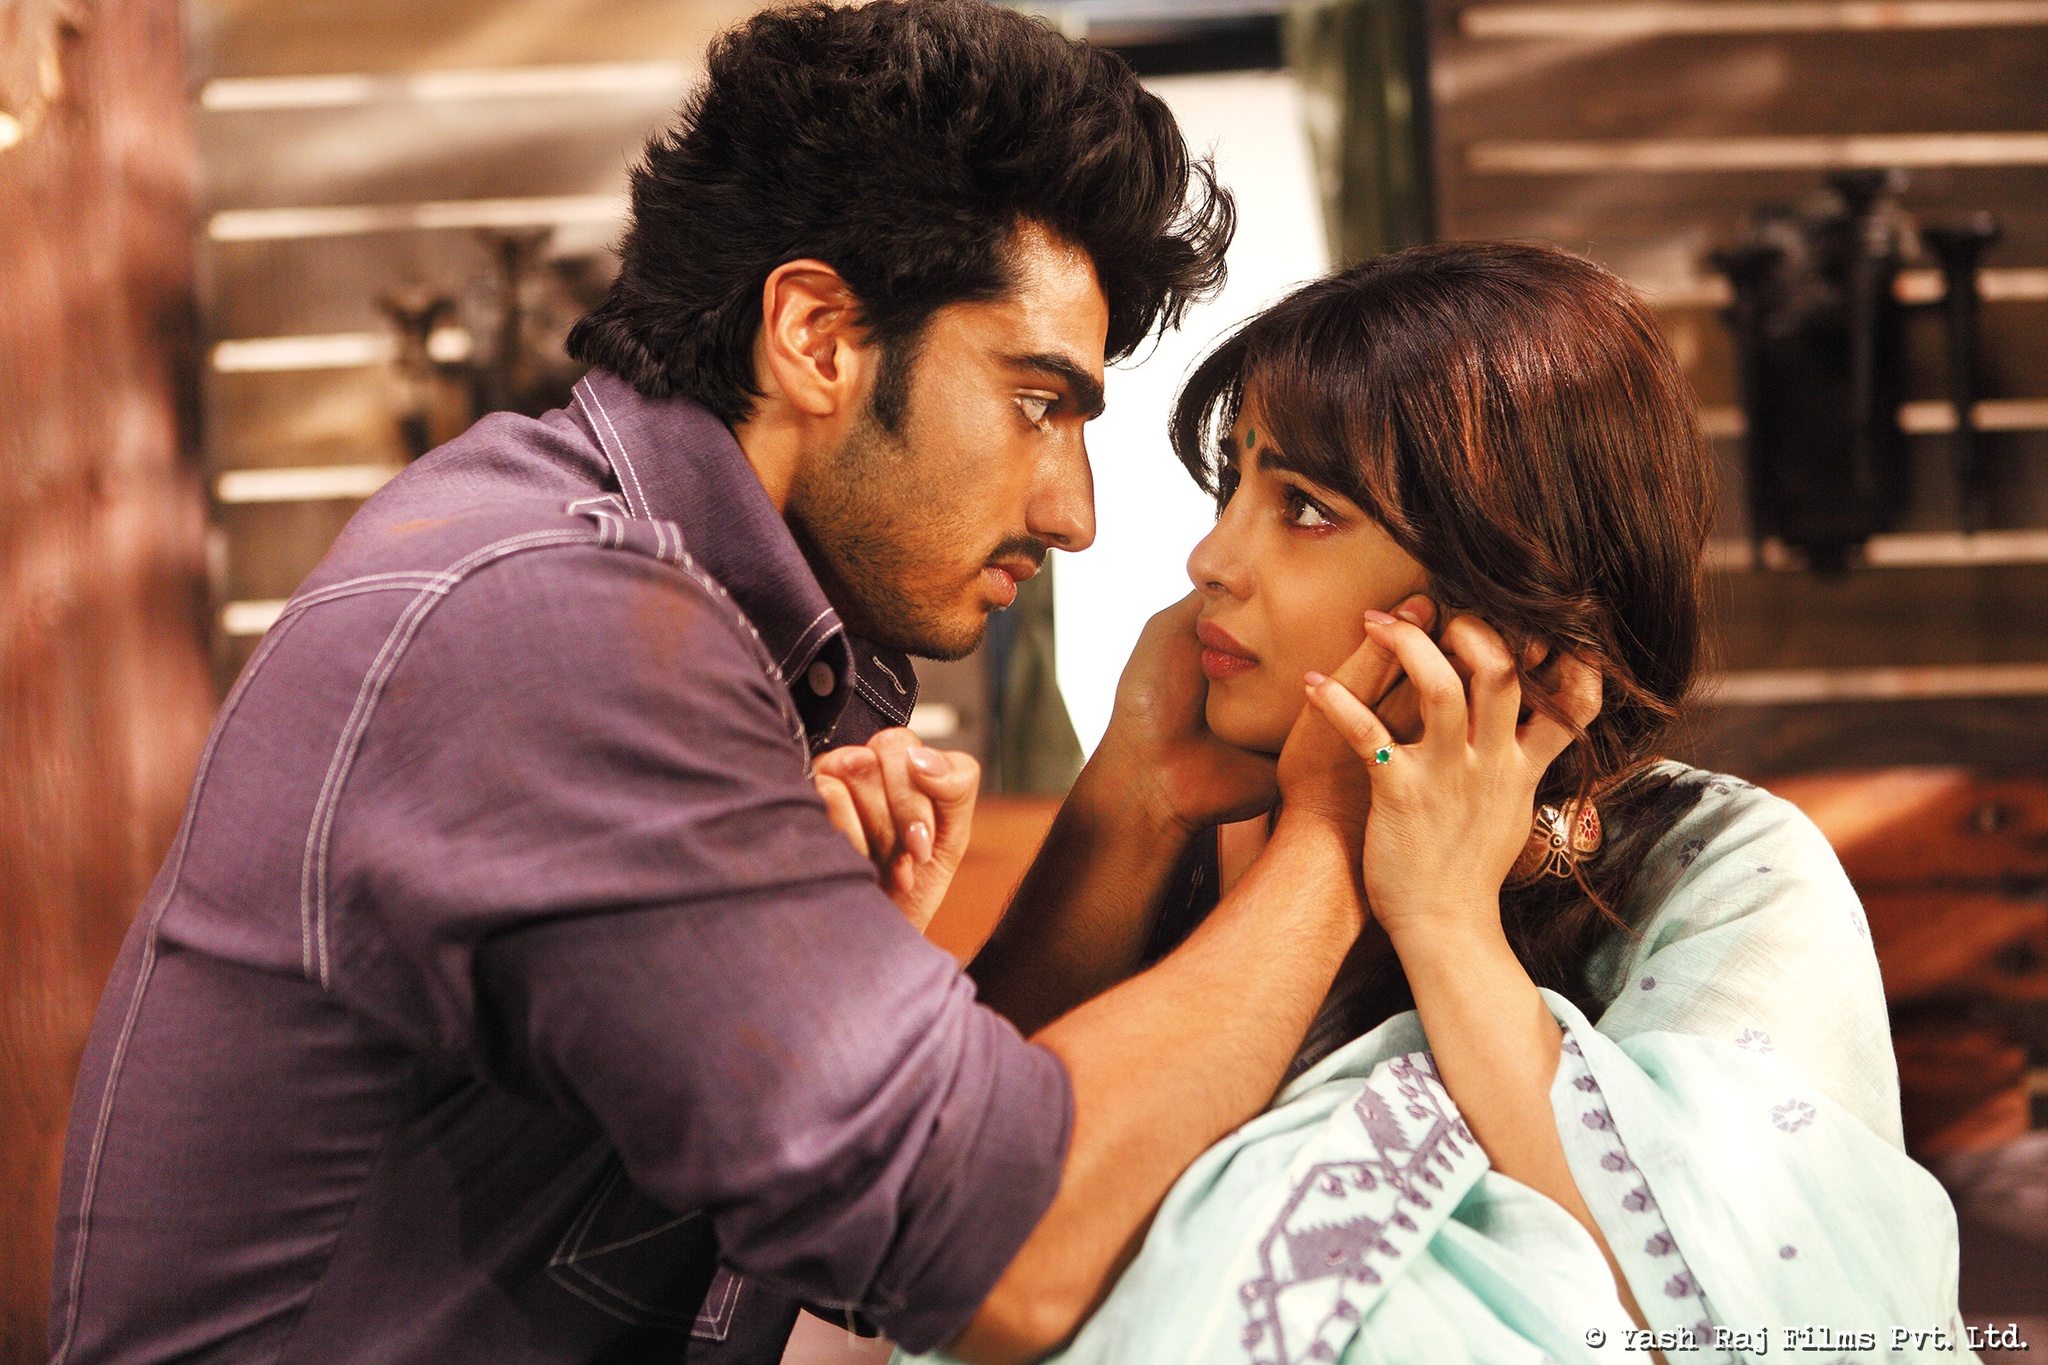 Still of Priyanka Chopra and Arjun Kapoor in Gunday (2014)